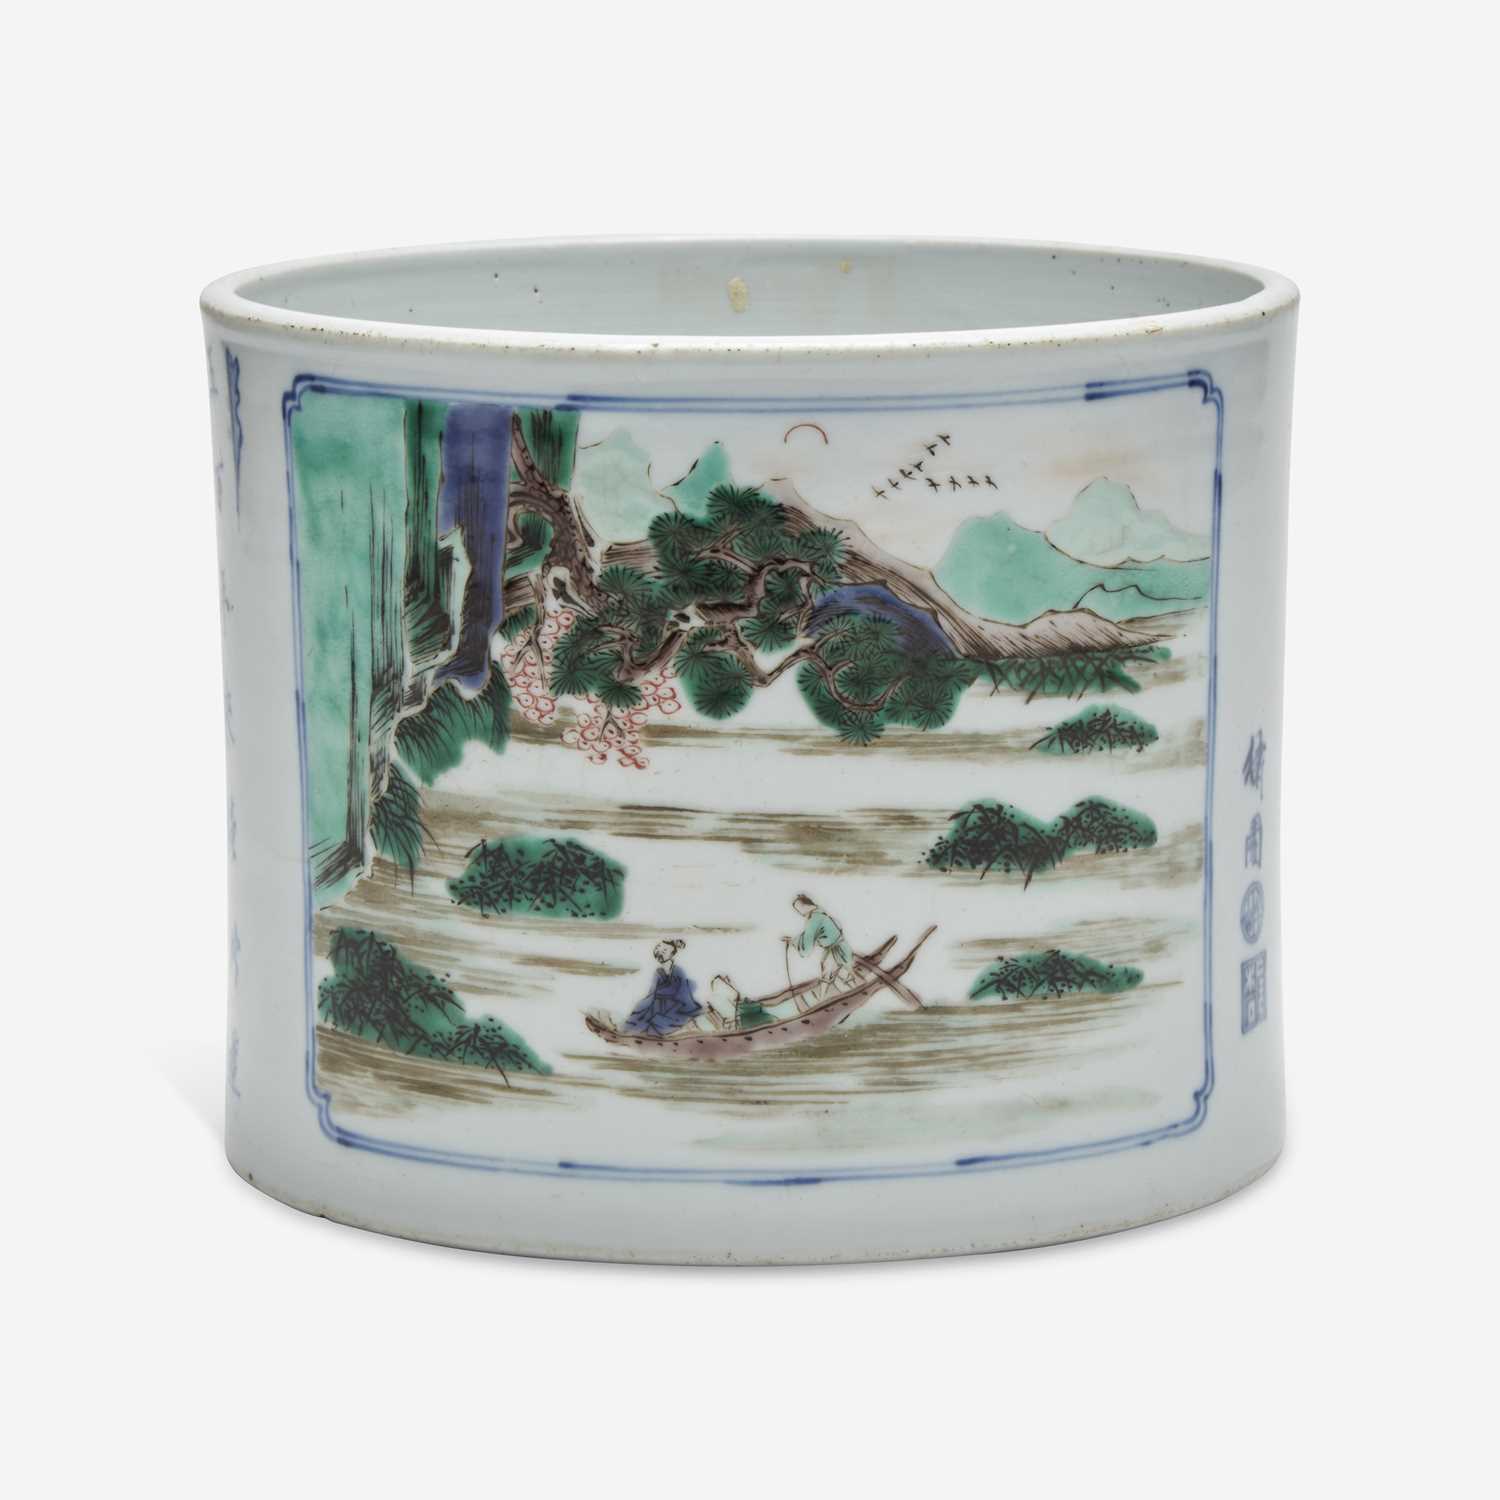 Lot 9 - A Chinese famille verte-decorated porcelain brush pot 五彩笔筒